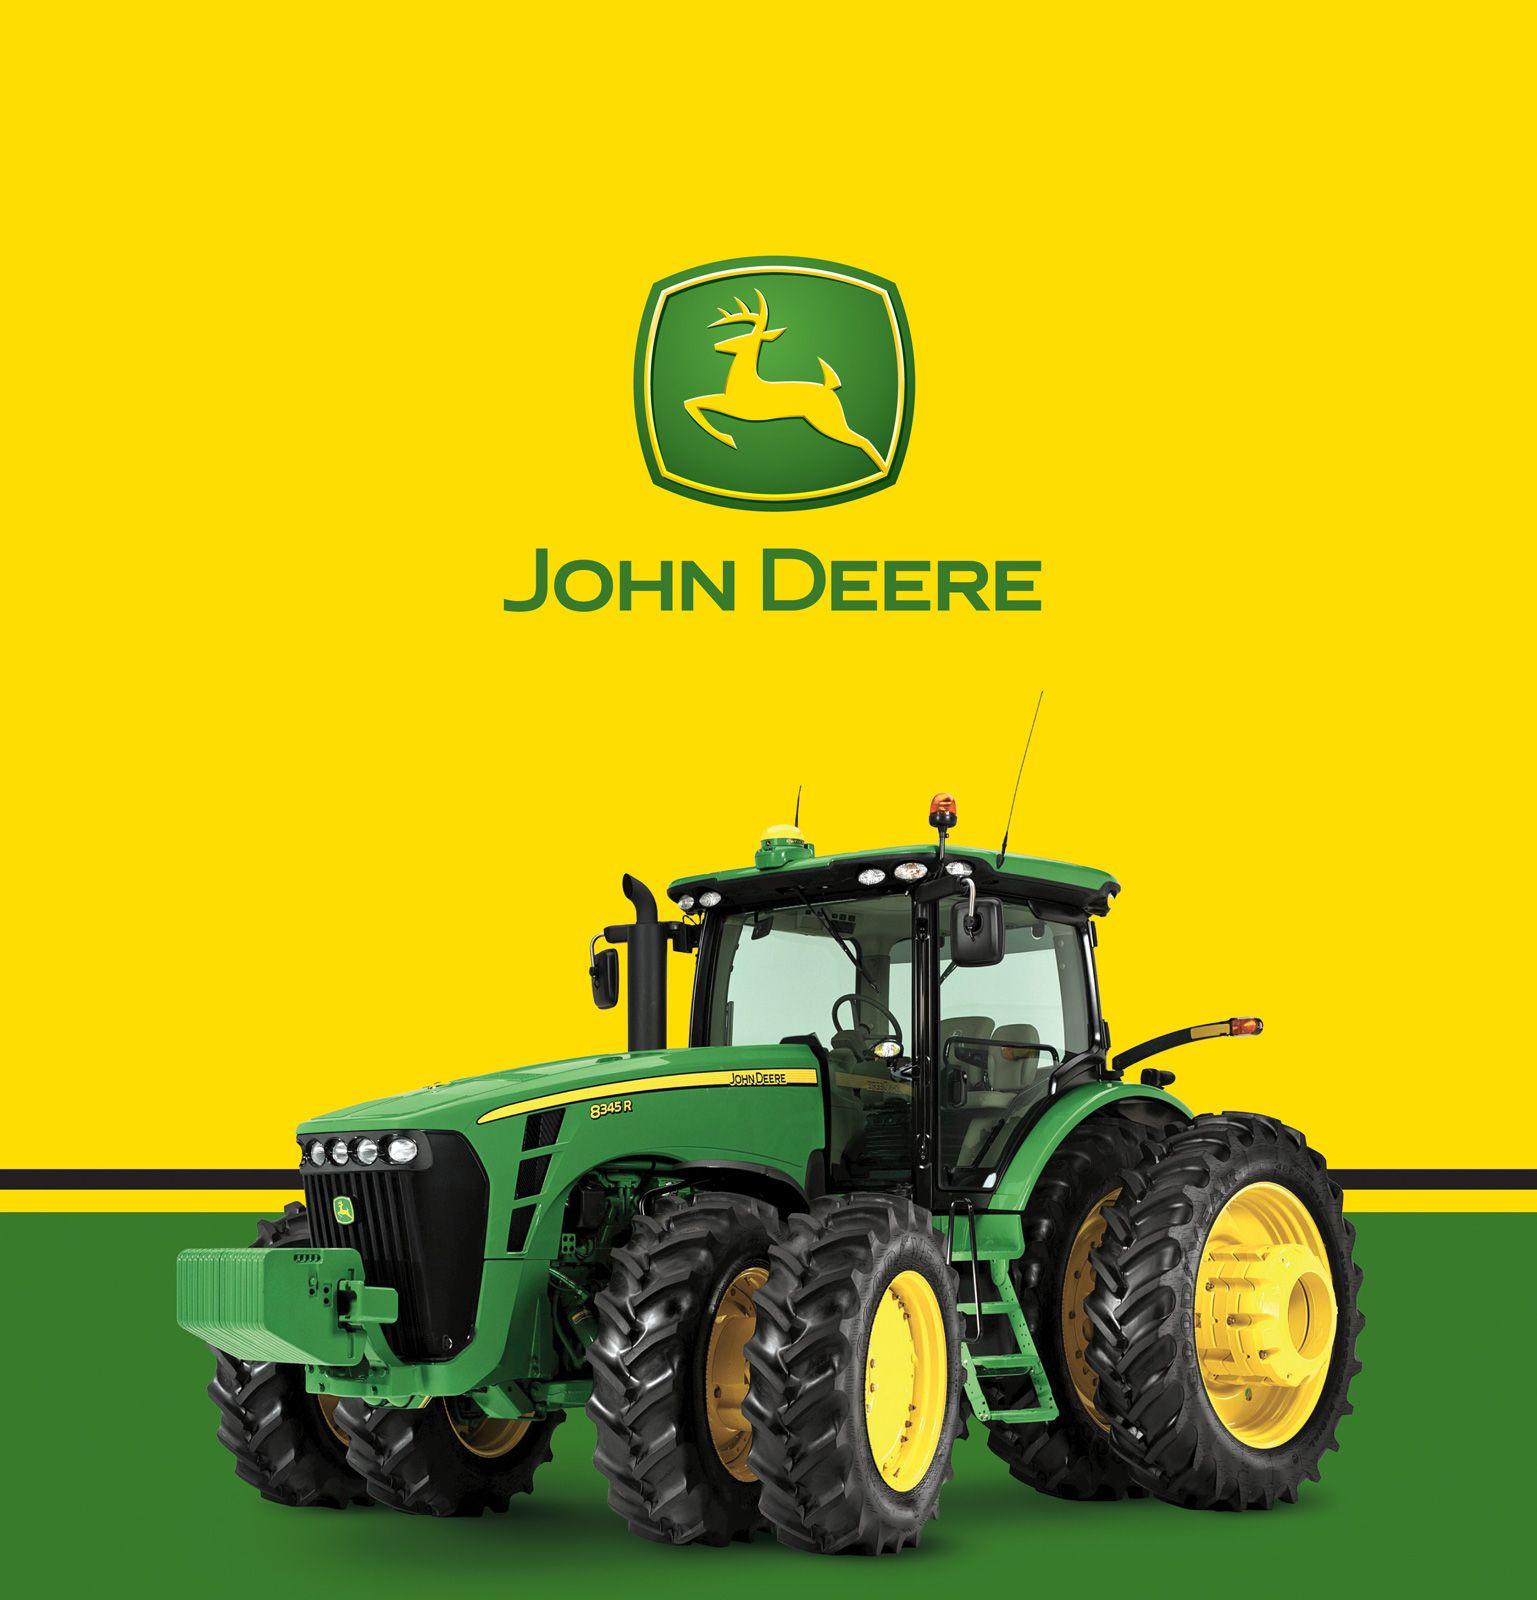 2018 John Deere Logo - John Deere parts Advisor